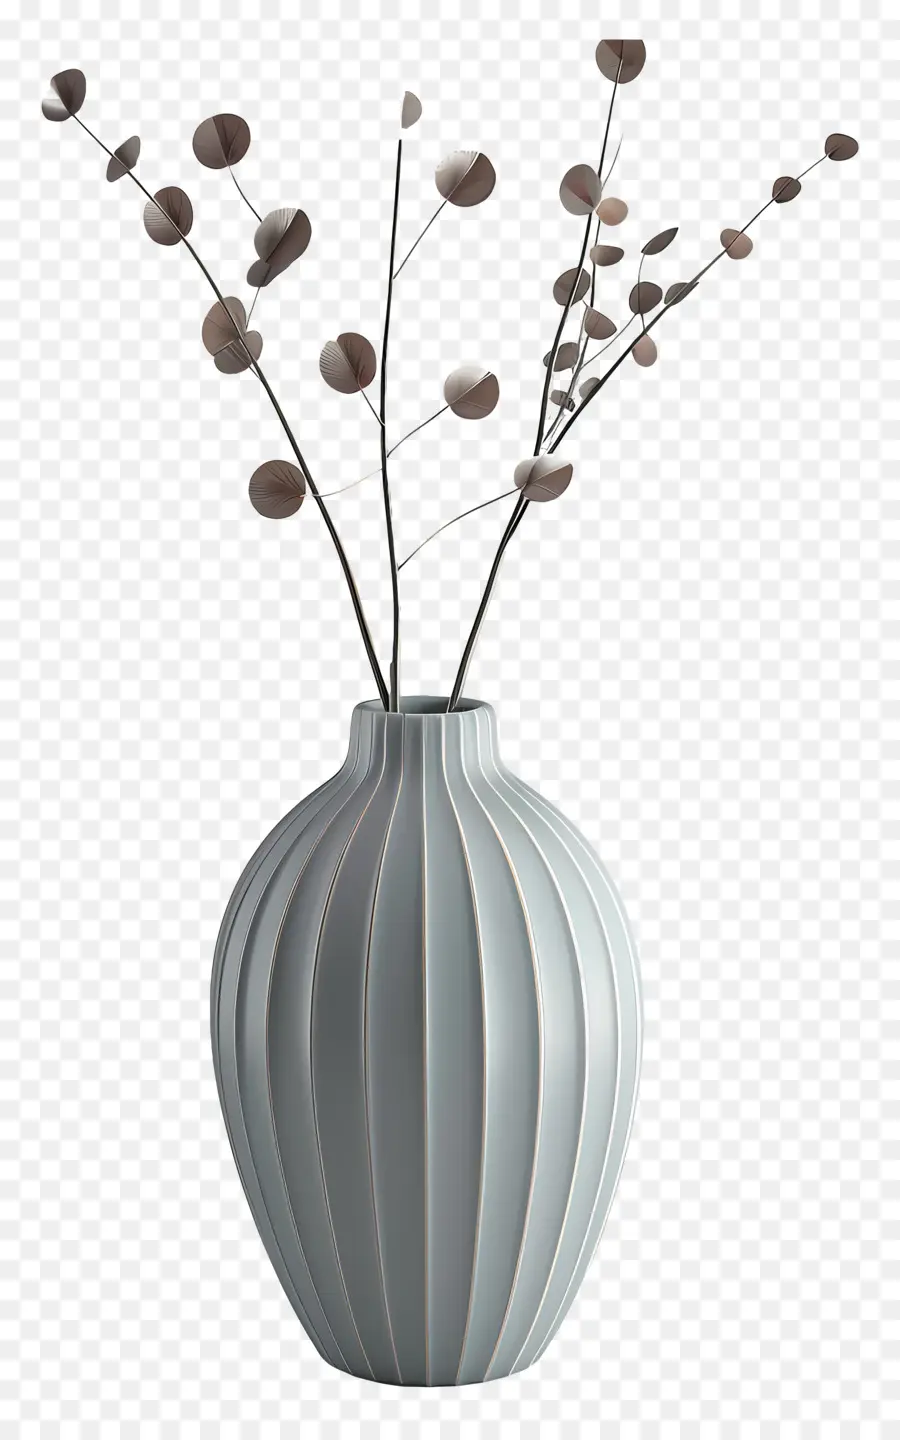 Vasi di ceramica nordico Vaso bianco Vase Branchi sul vaso Vaso Round Vase - Elegante vaso di porcellana bianca con piccoli rami